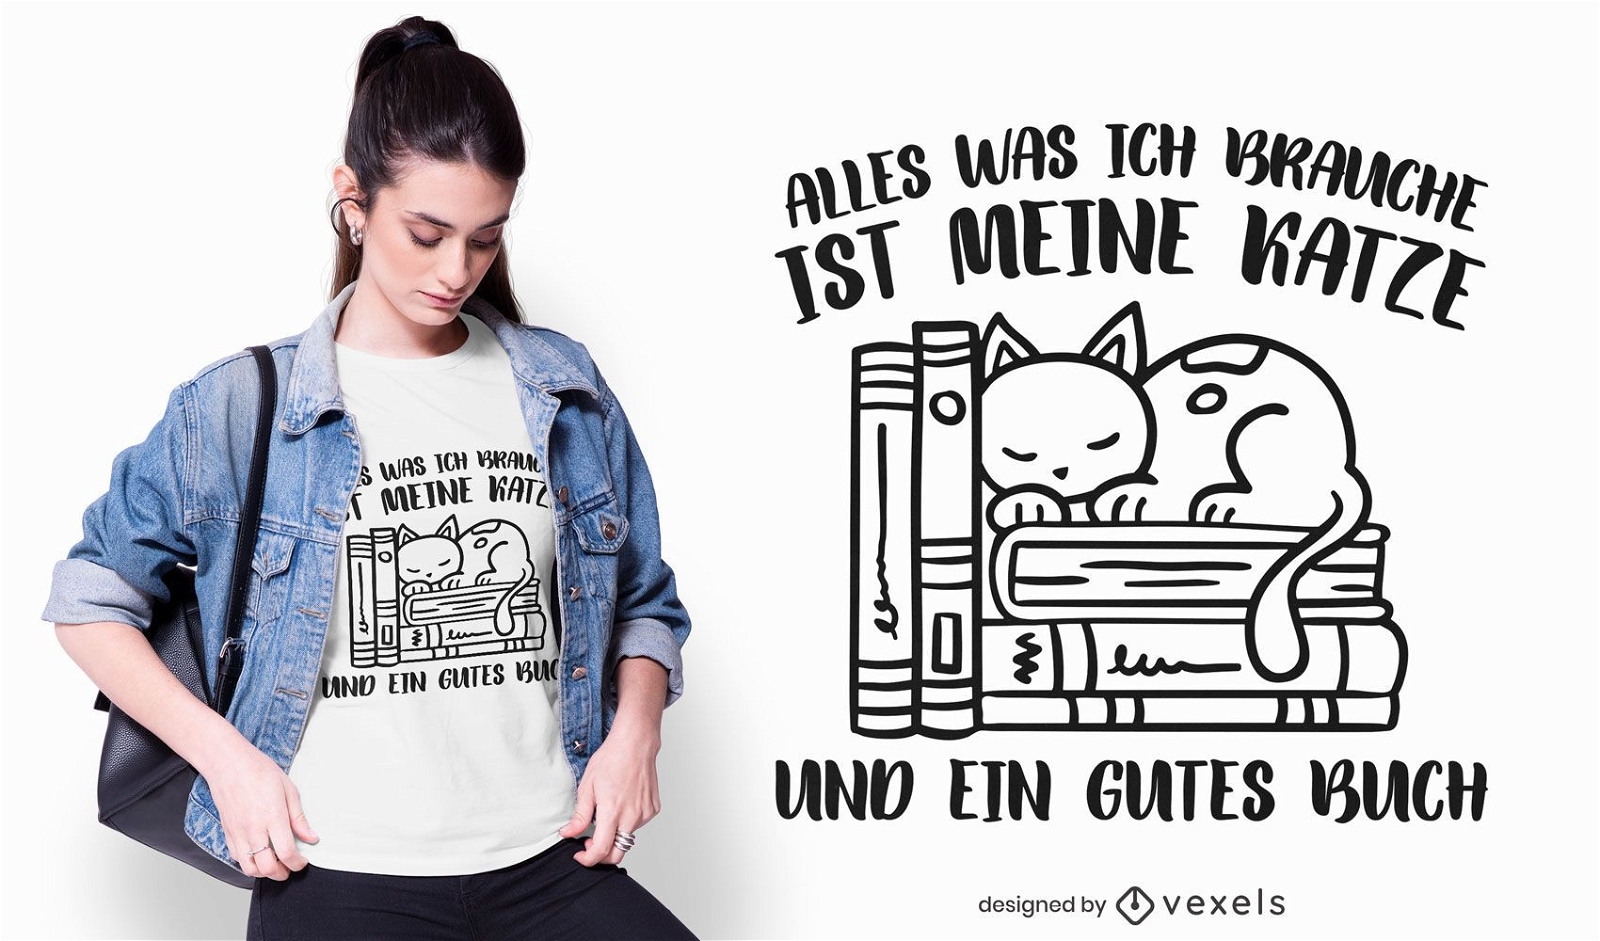 Dise?o de camiseta de cita alemana de libros y gatos.